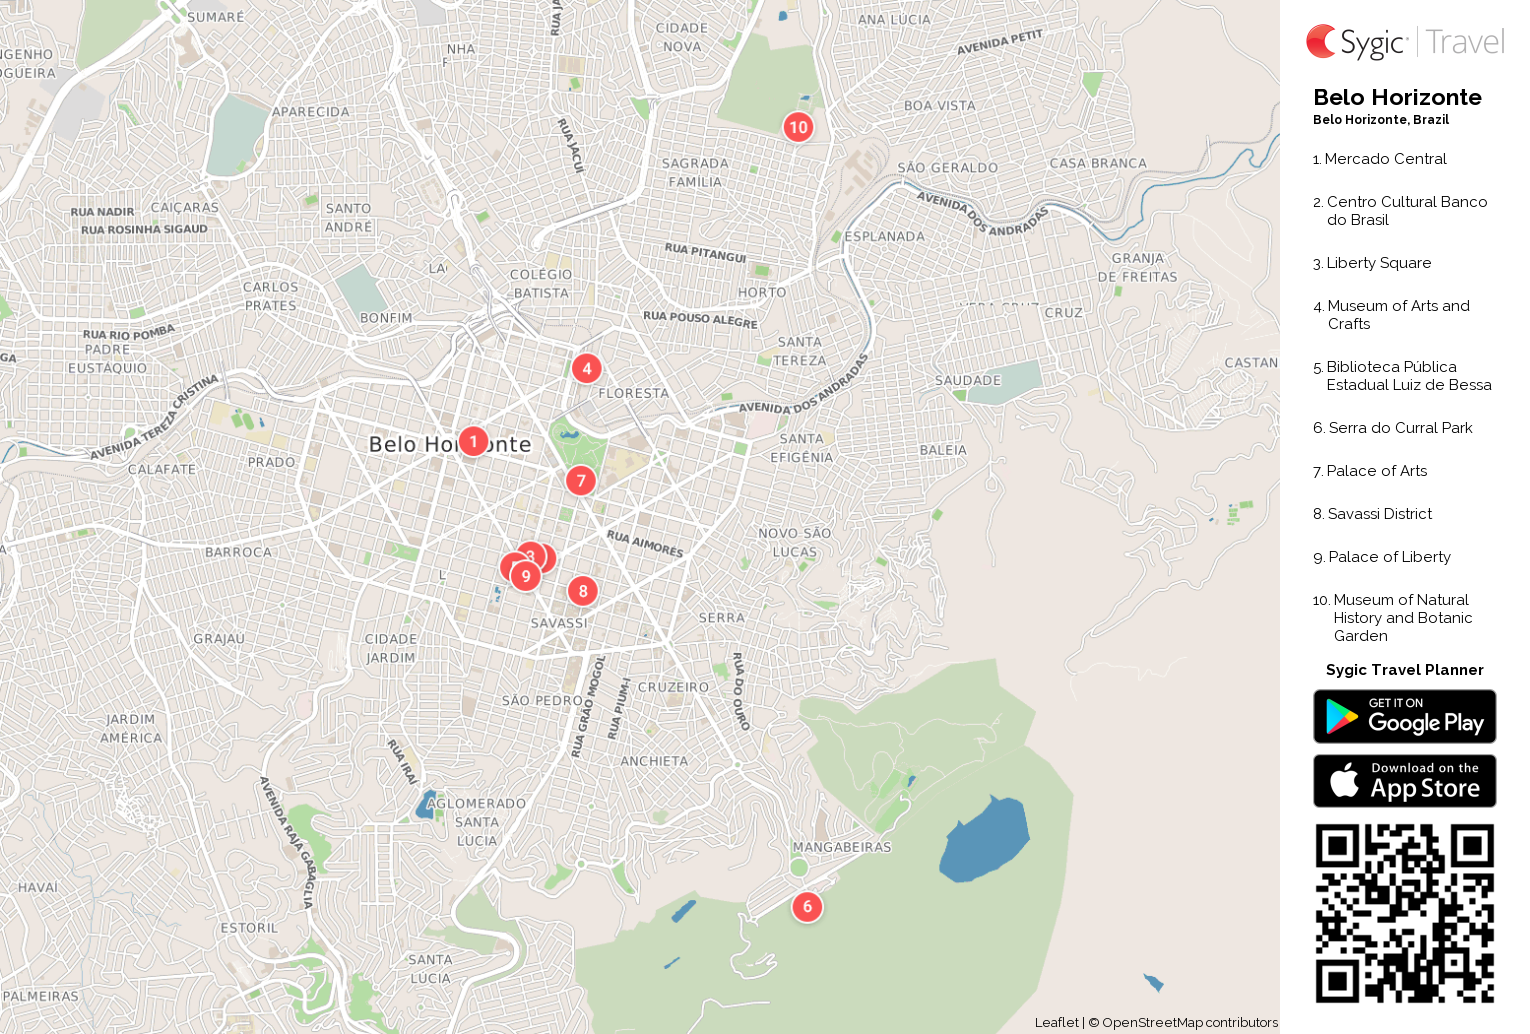 Belo Horizonte Printable Tourist Map | Sygic Travel